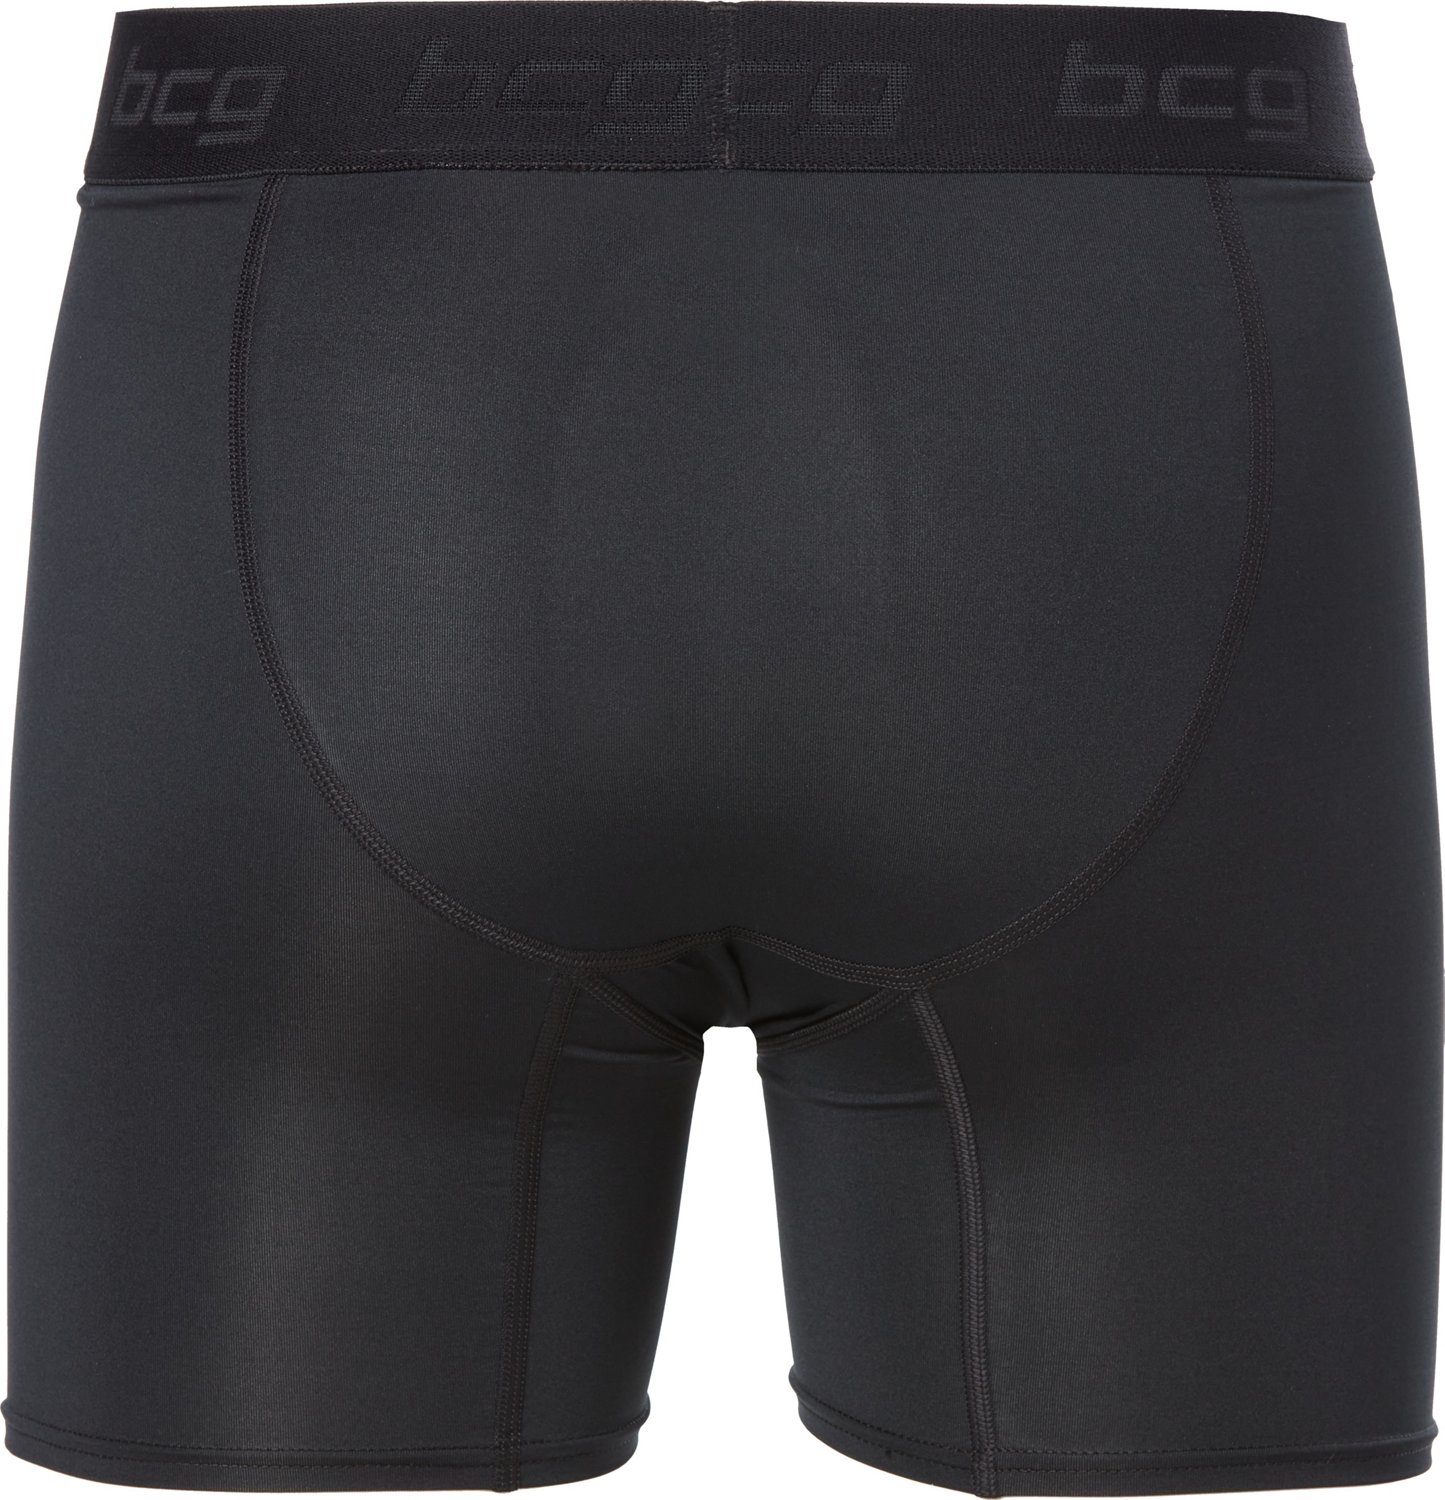 BCG Men's Athletic Compression Solid Brief Shorts 6 in